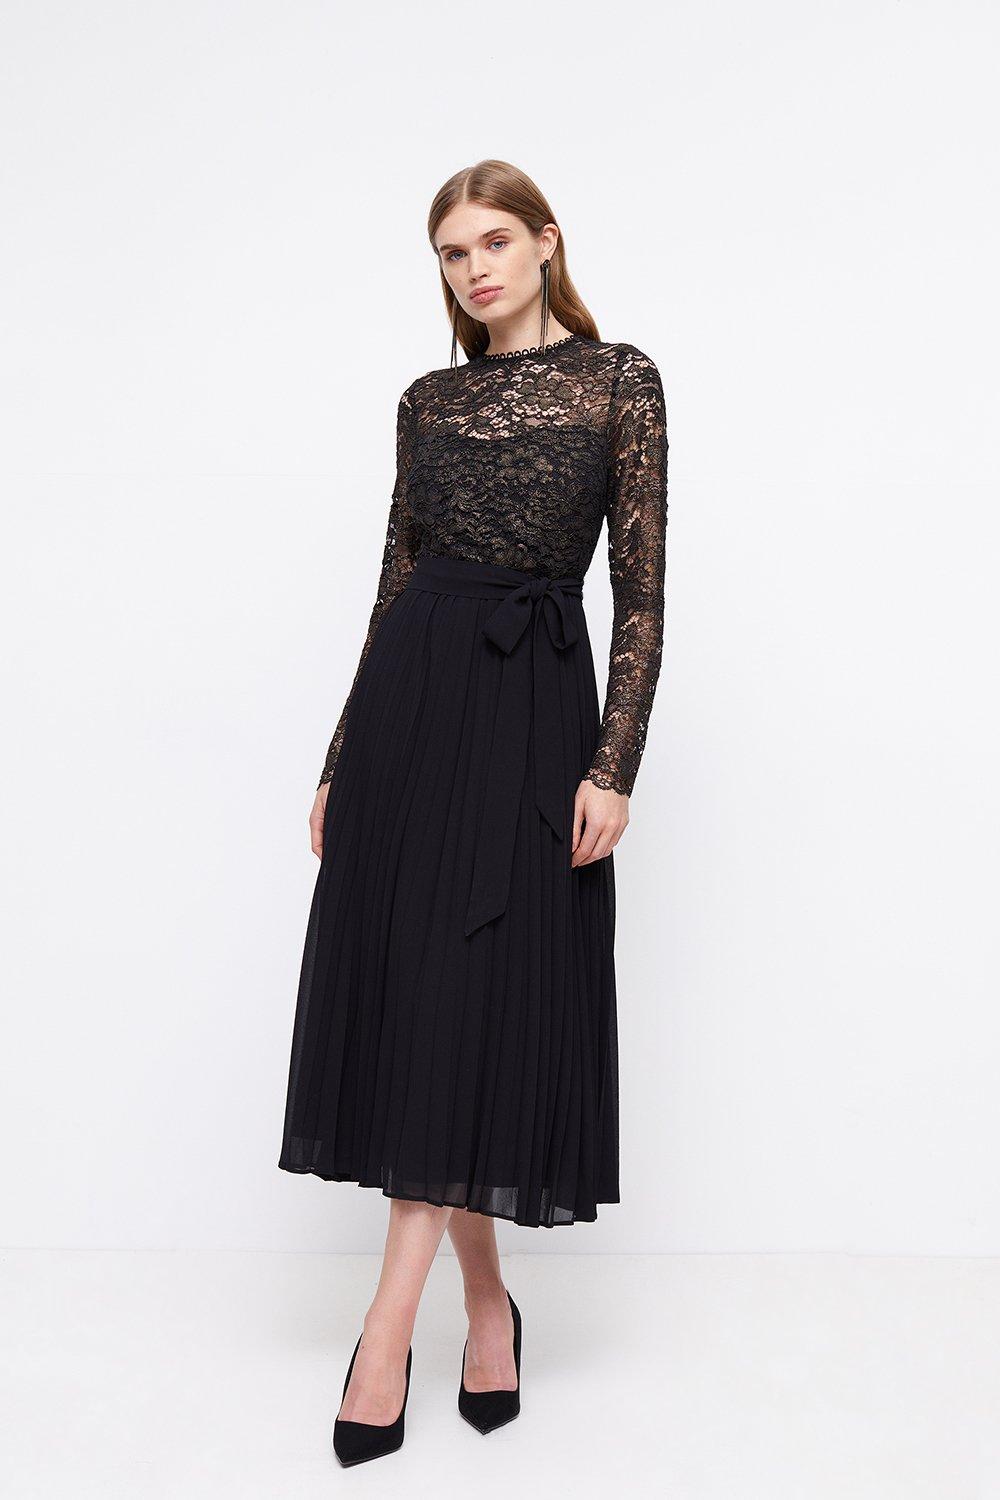 Metallic Long Sleeve Lace Bodice Pleat Skirt - Black